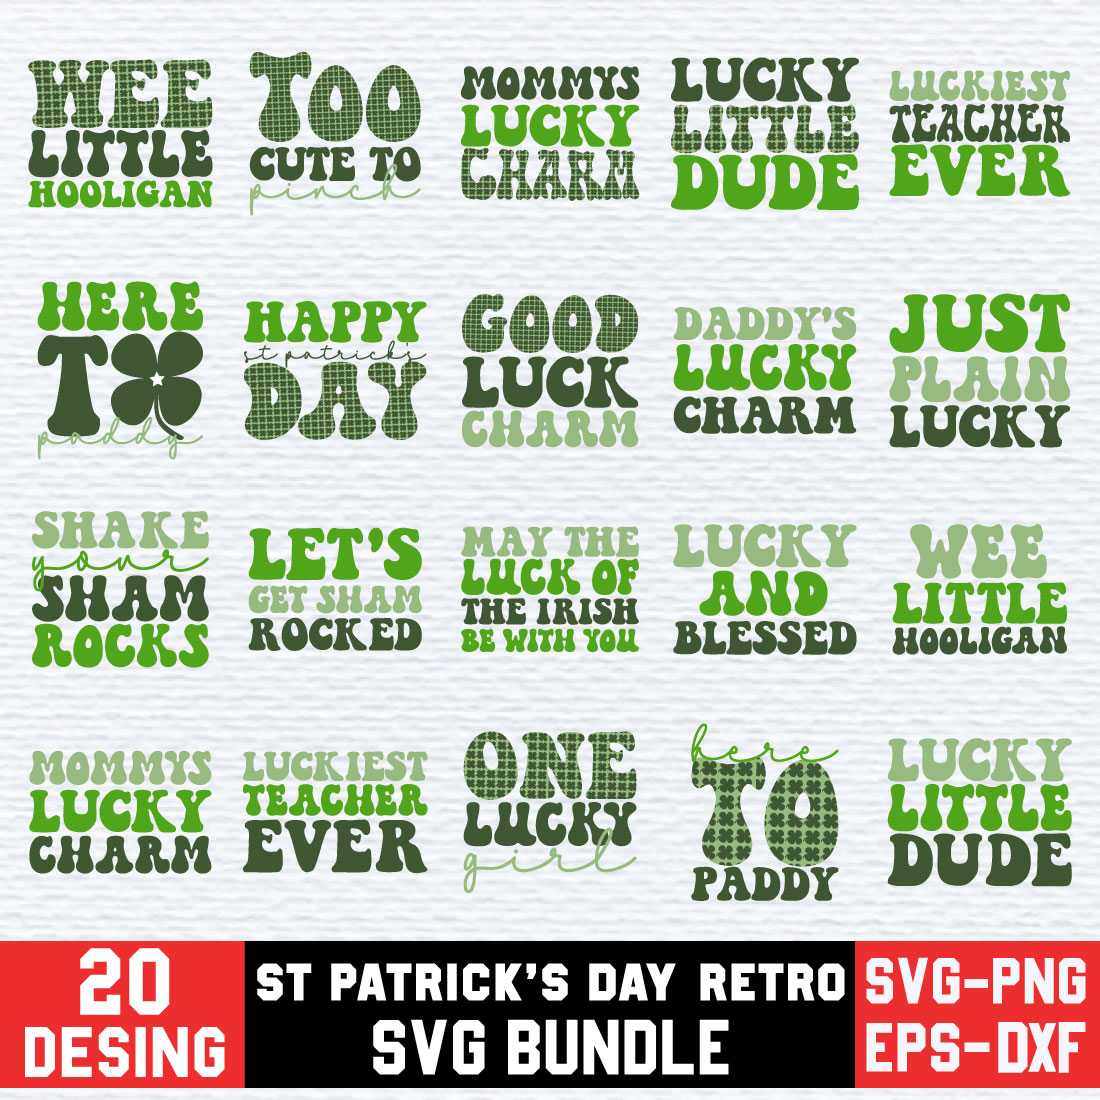 St Patrick's Day Retro Svg Bundle preview image.